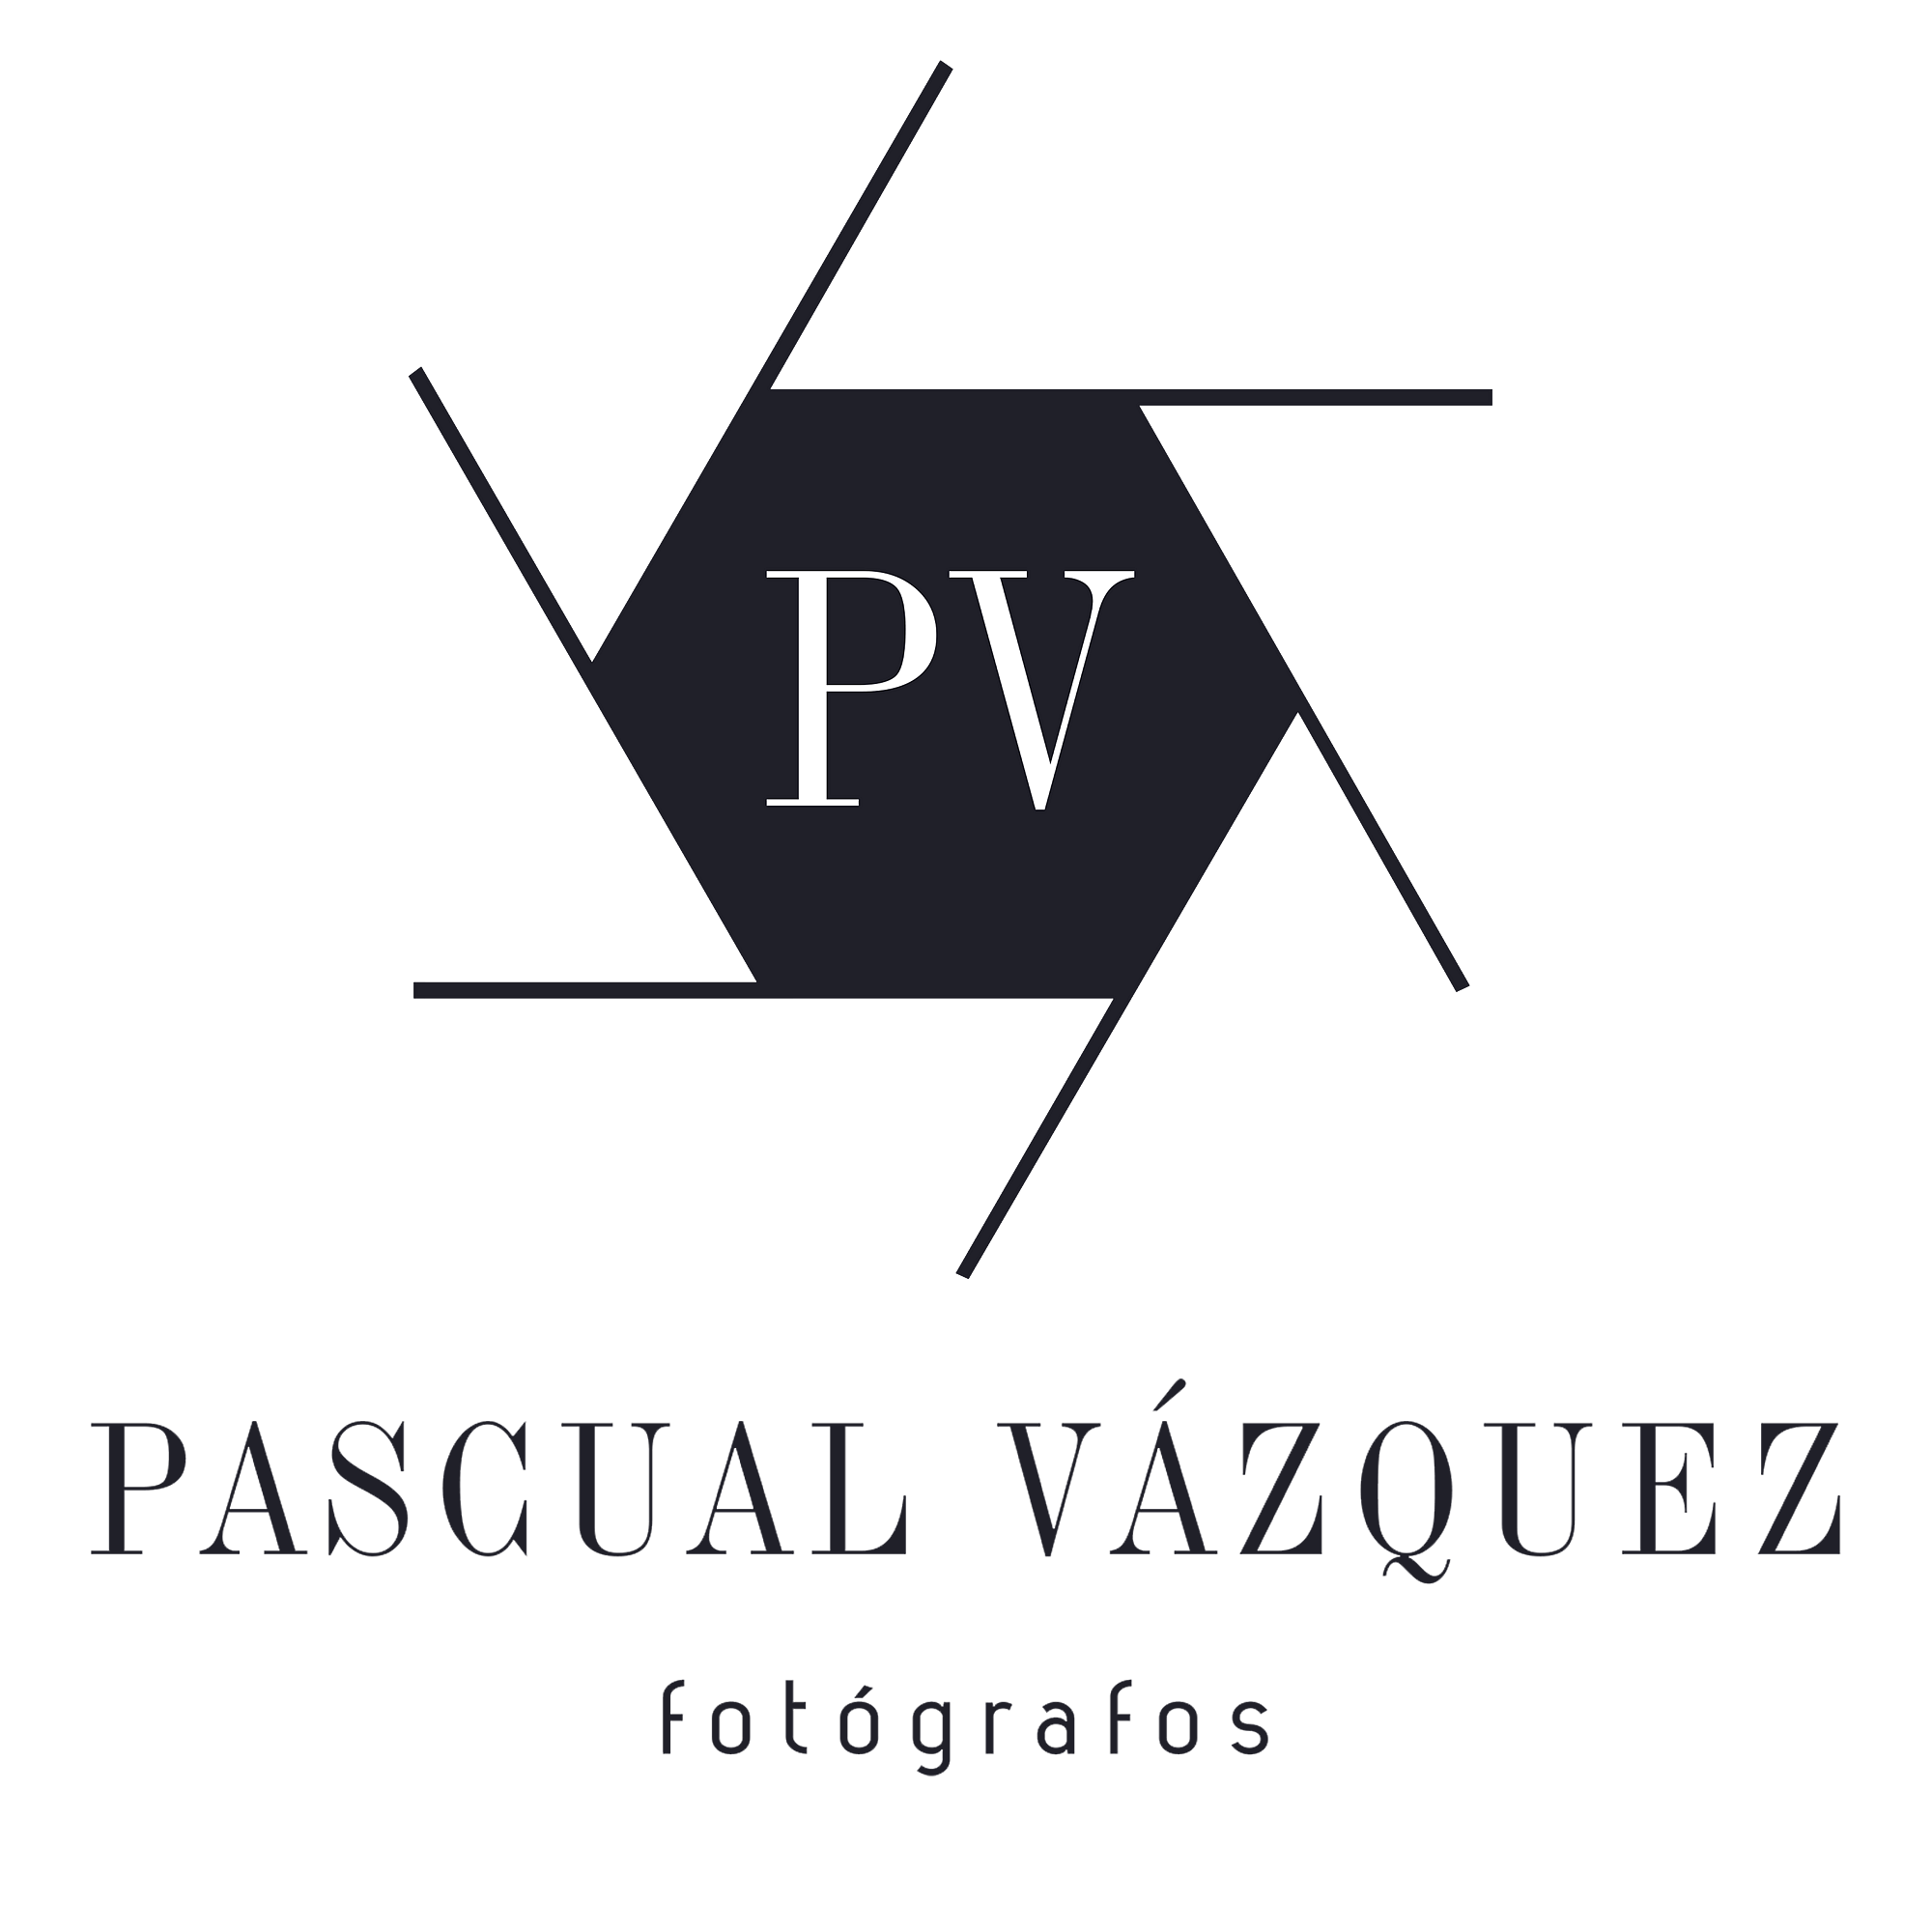 Pascual Vázquez Fotógrafos - logotipo.png